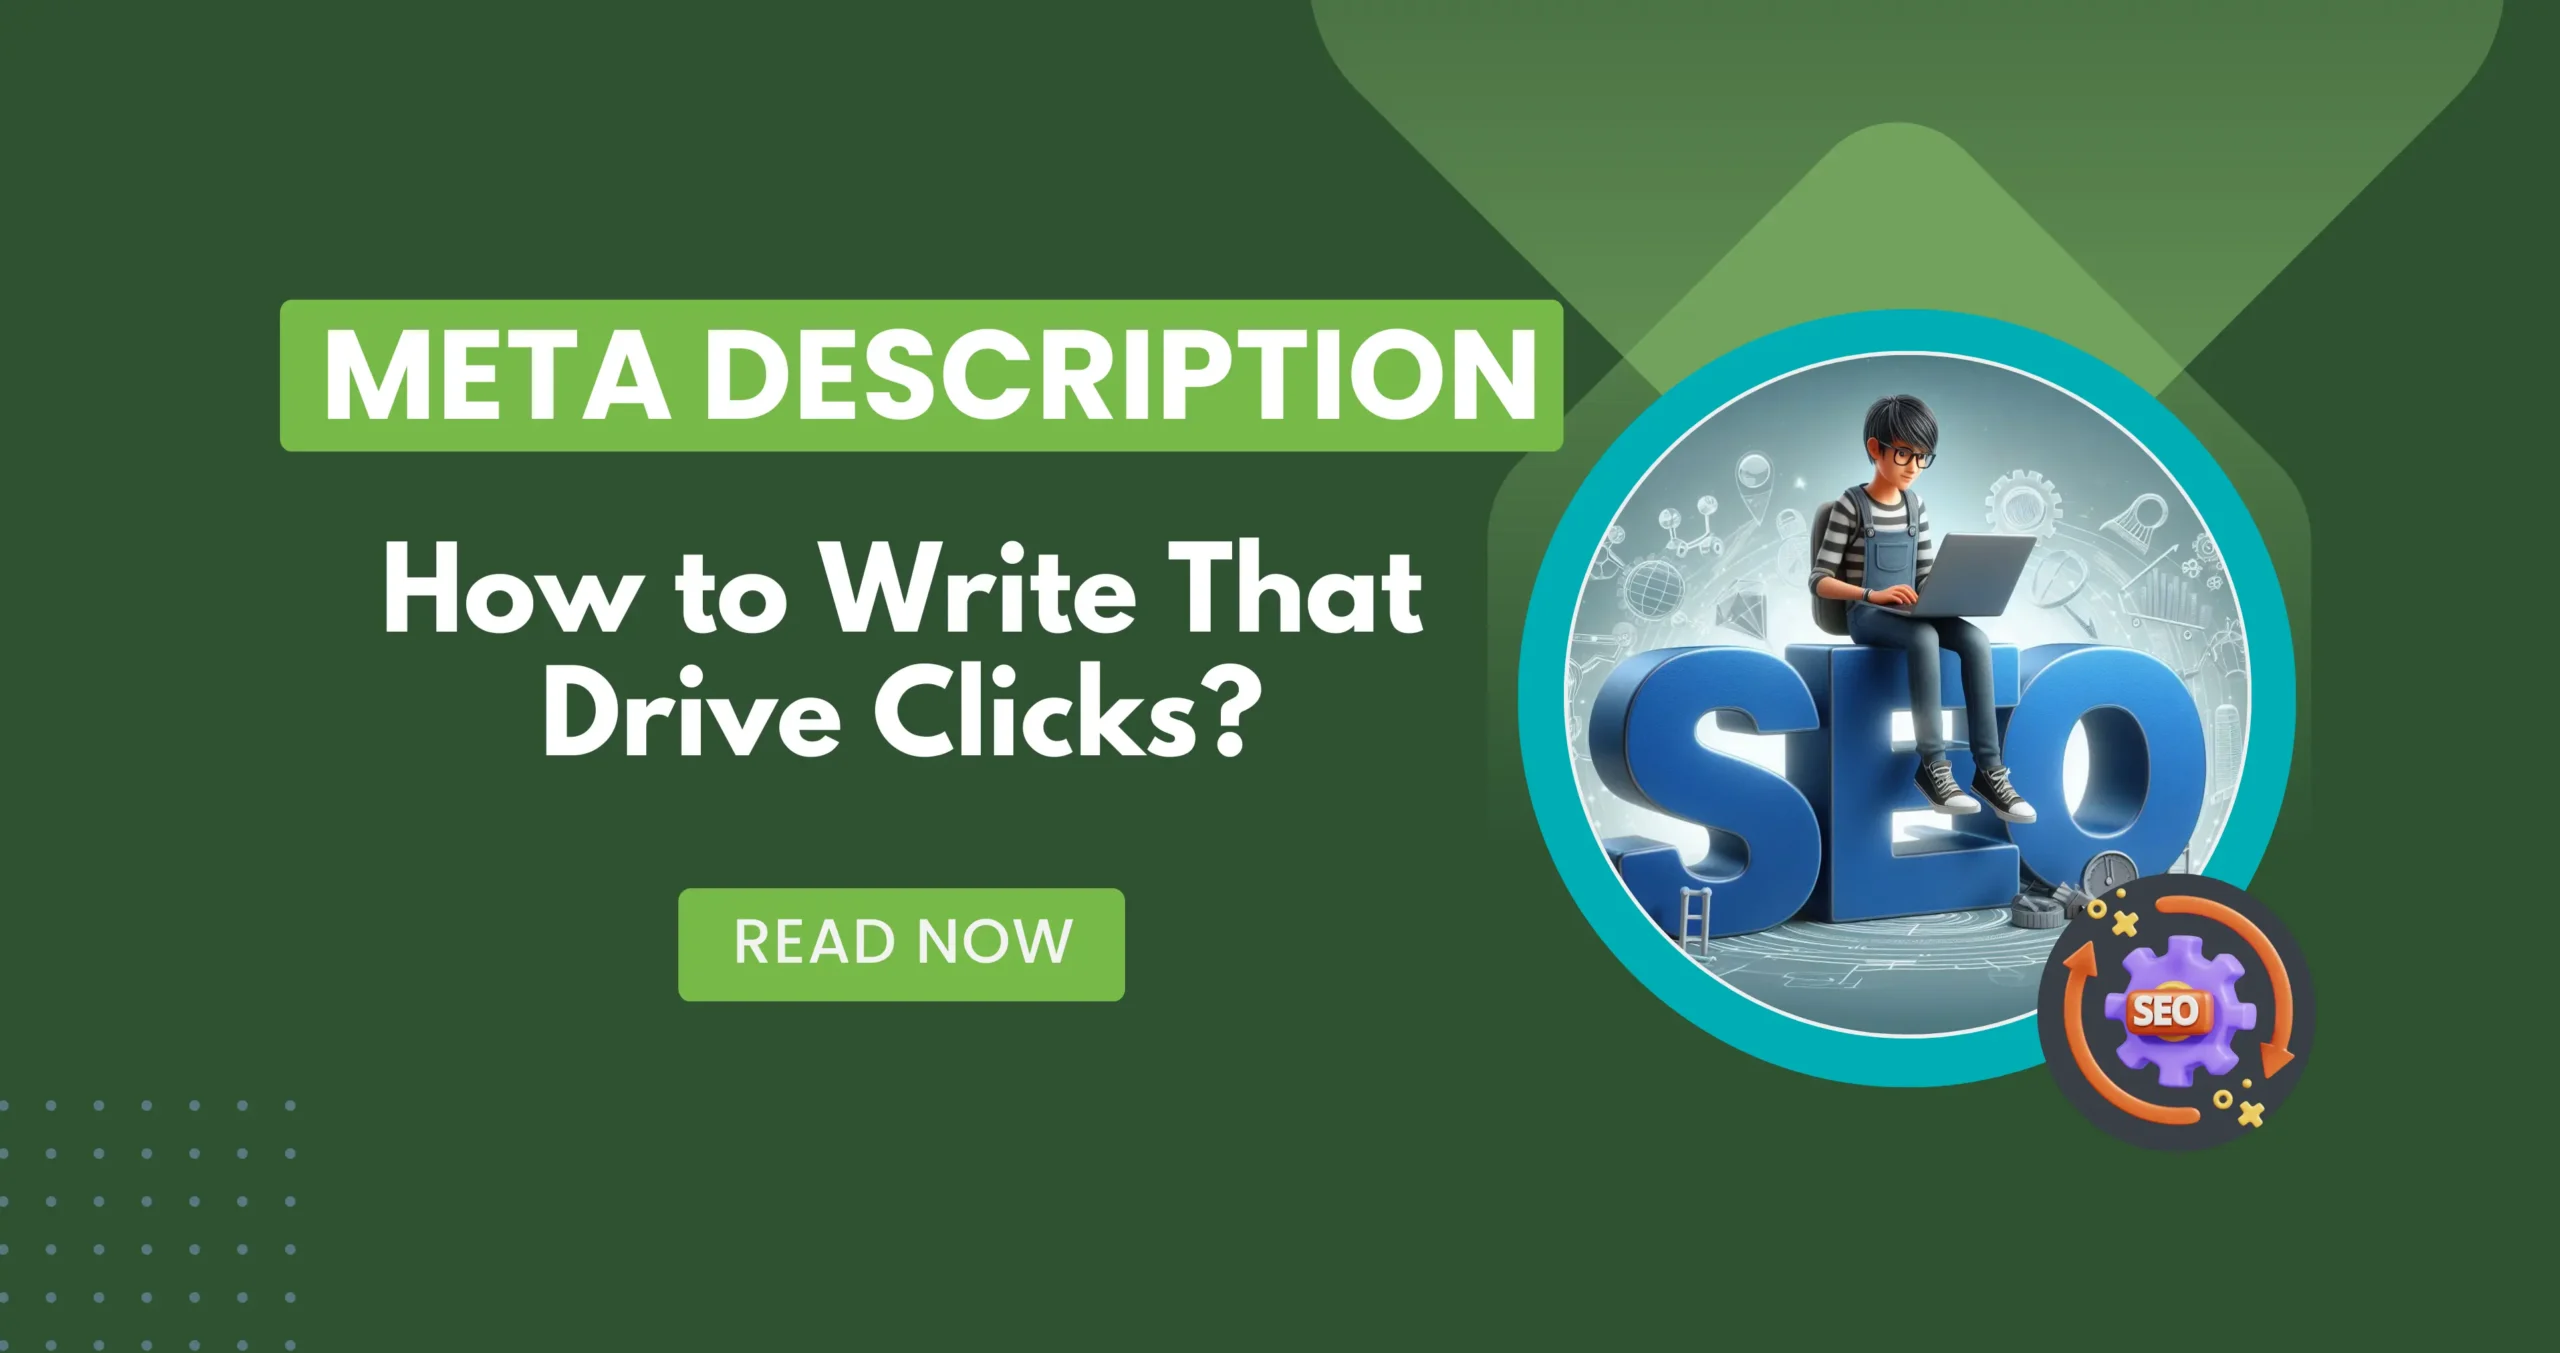 Meta Description Guide: How to Write That Drive Clicks?